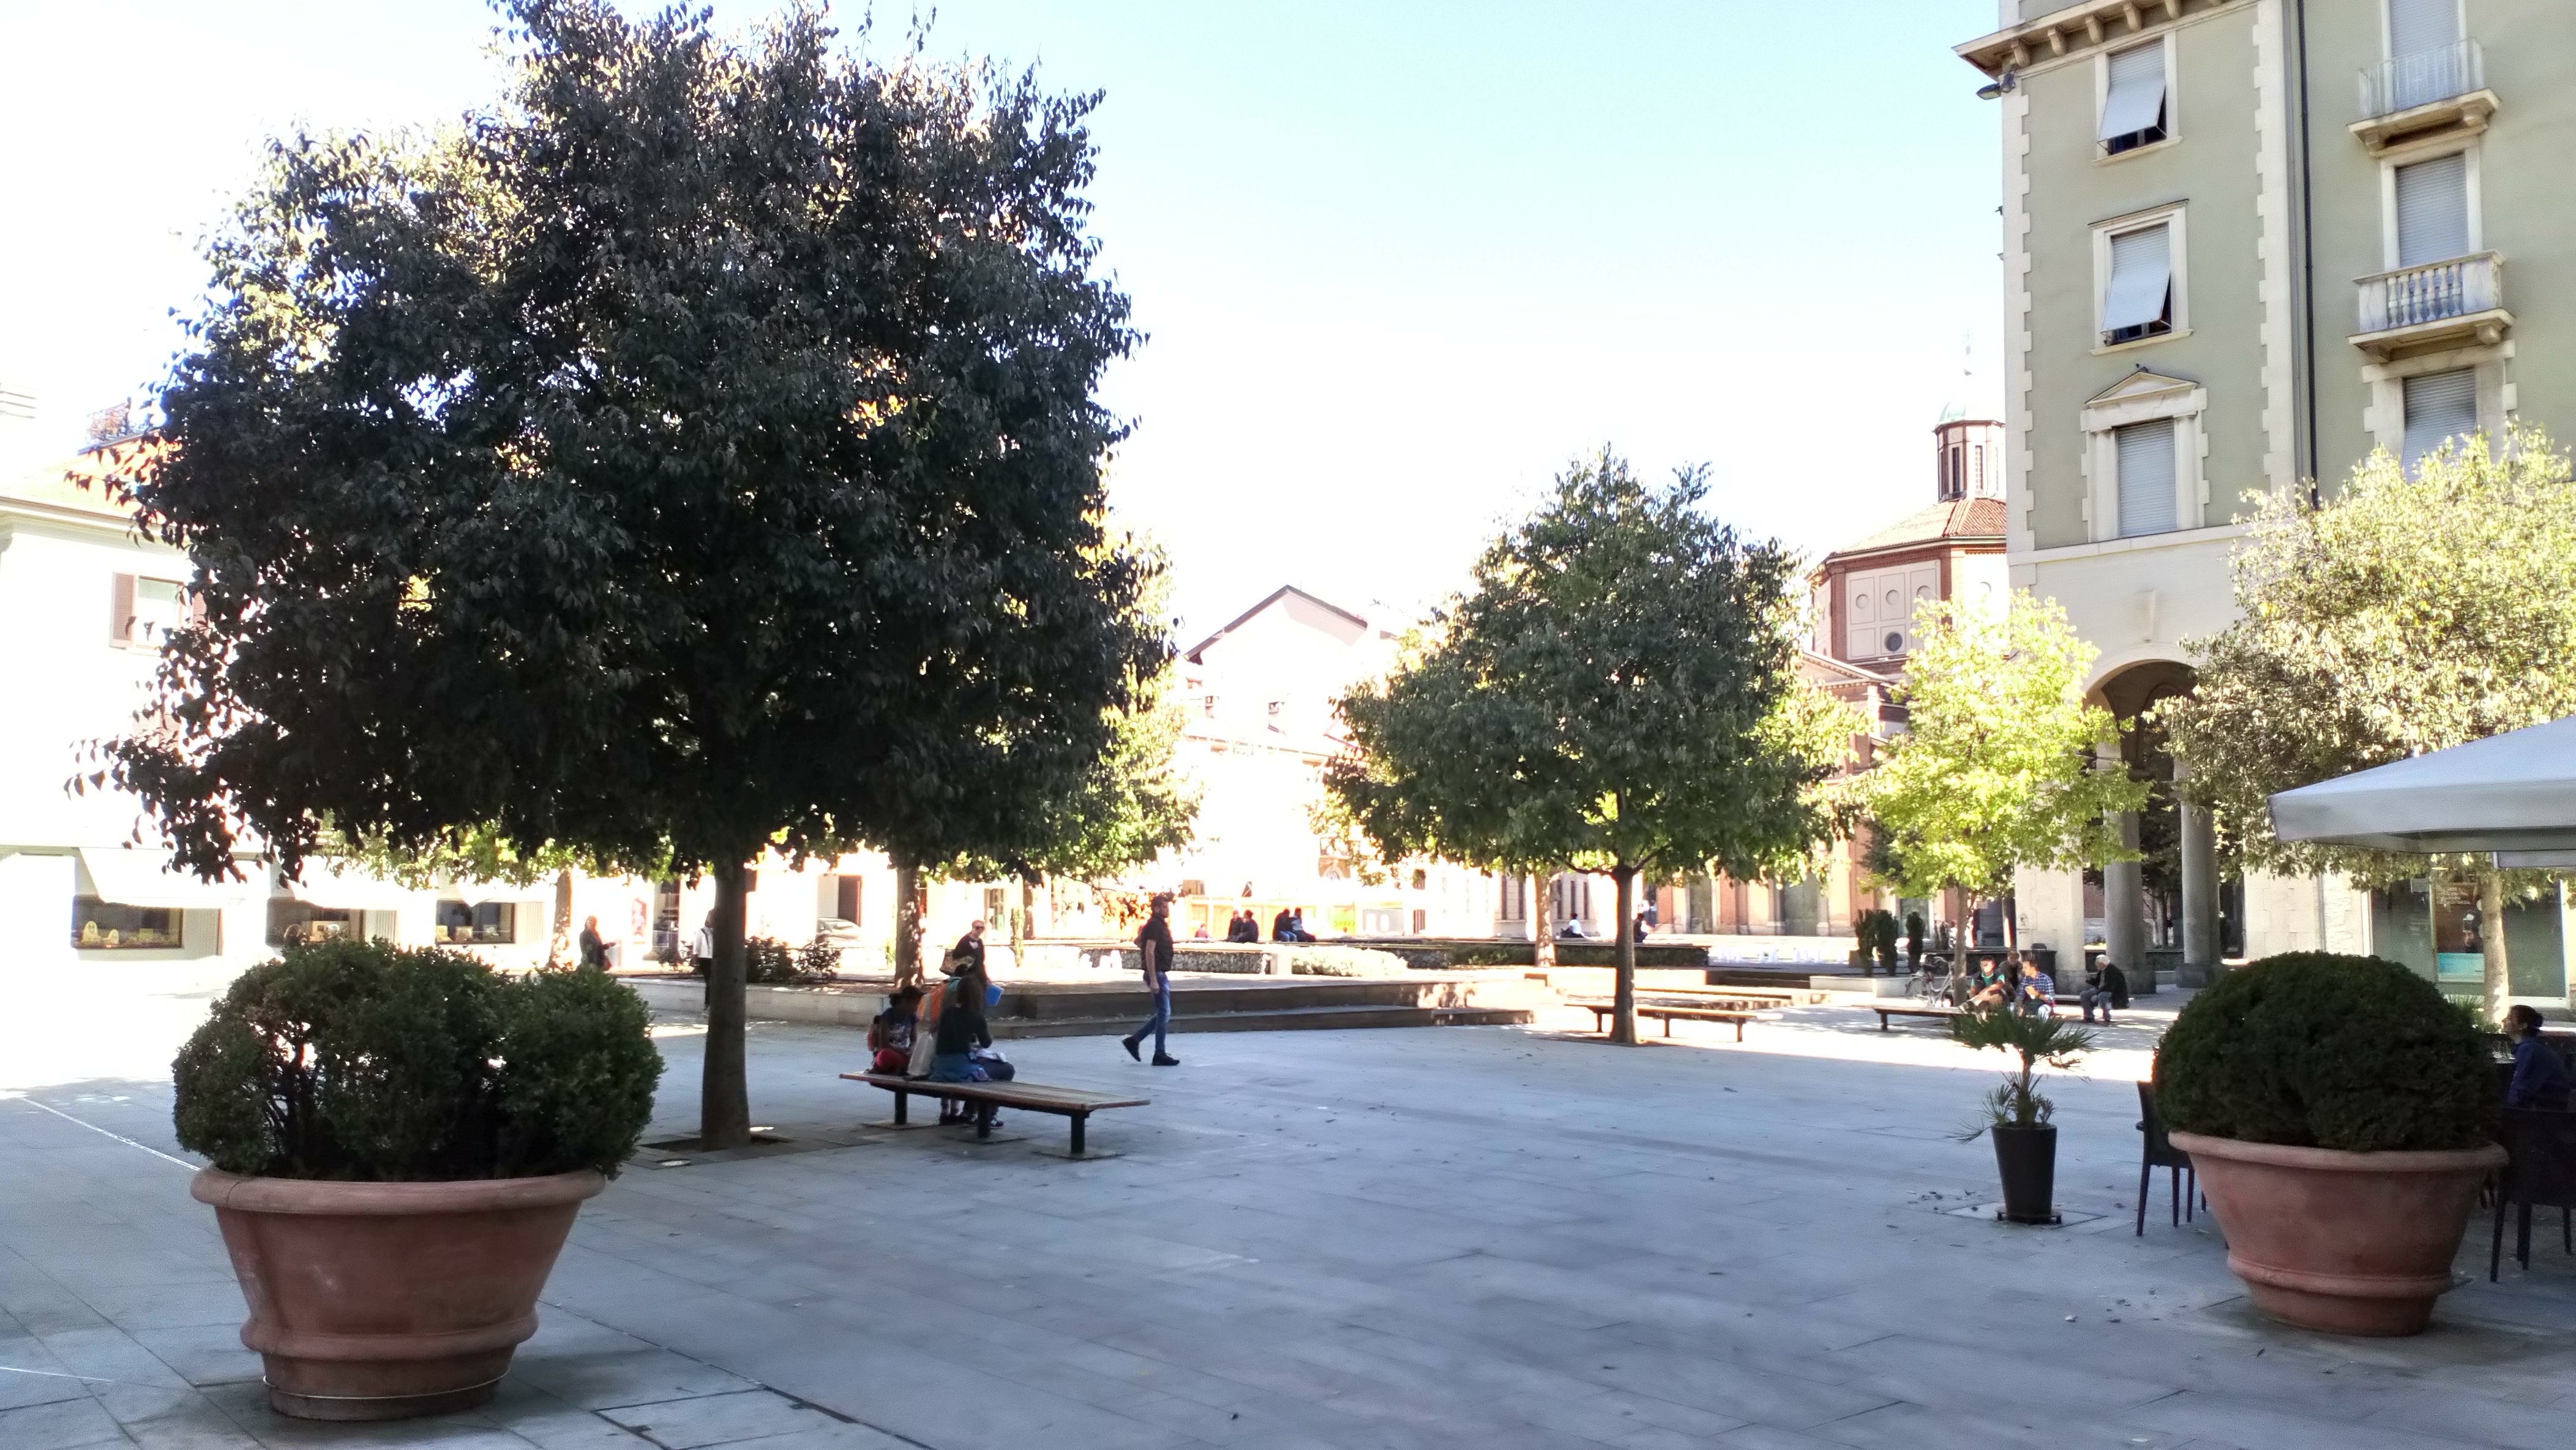 Piazza San Magno